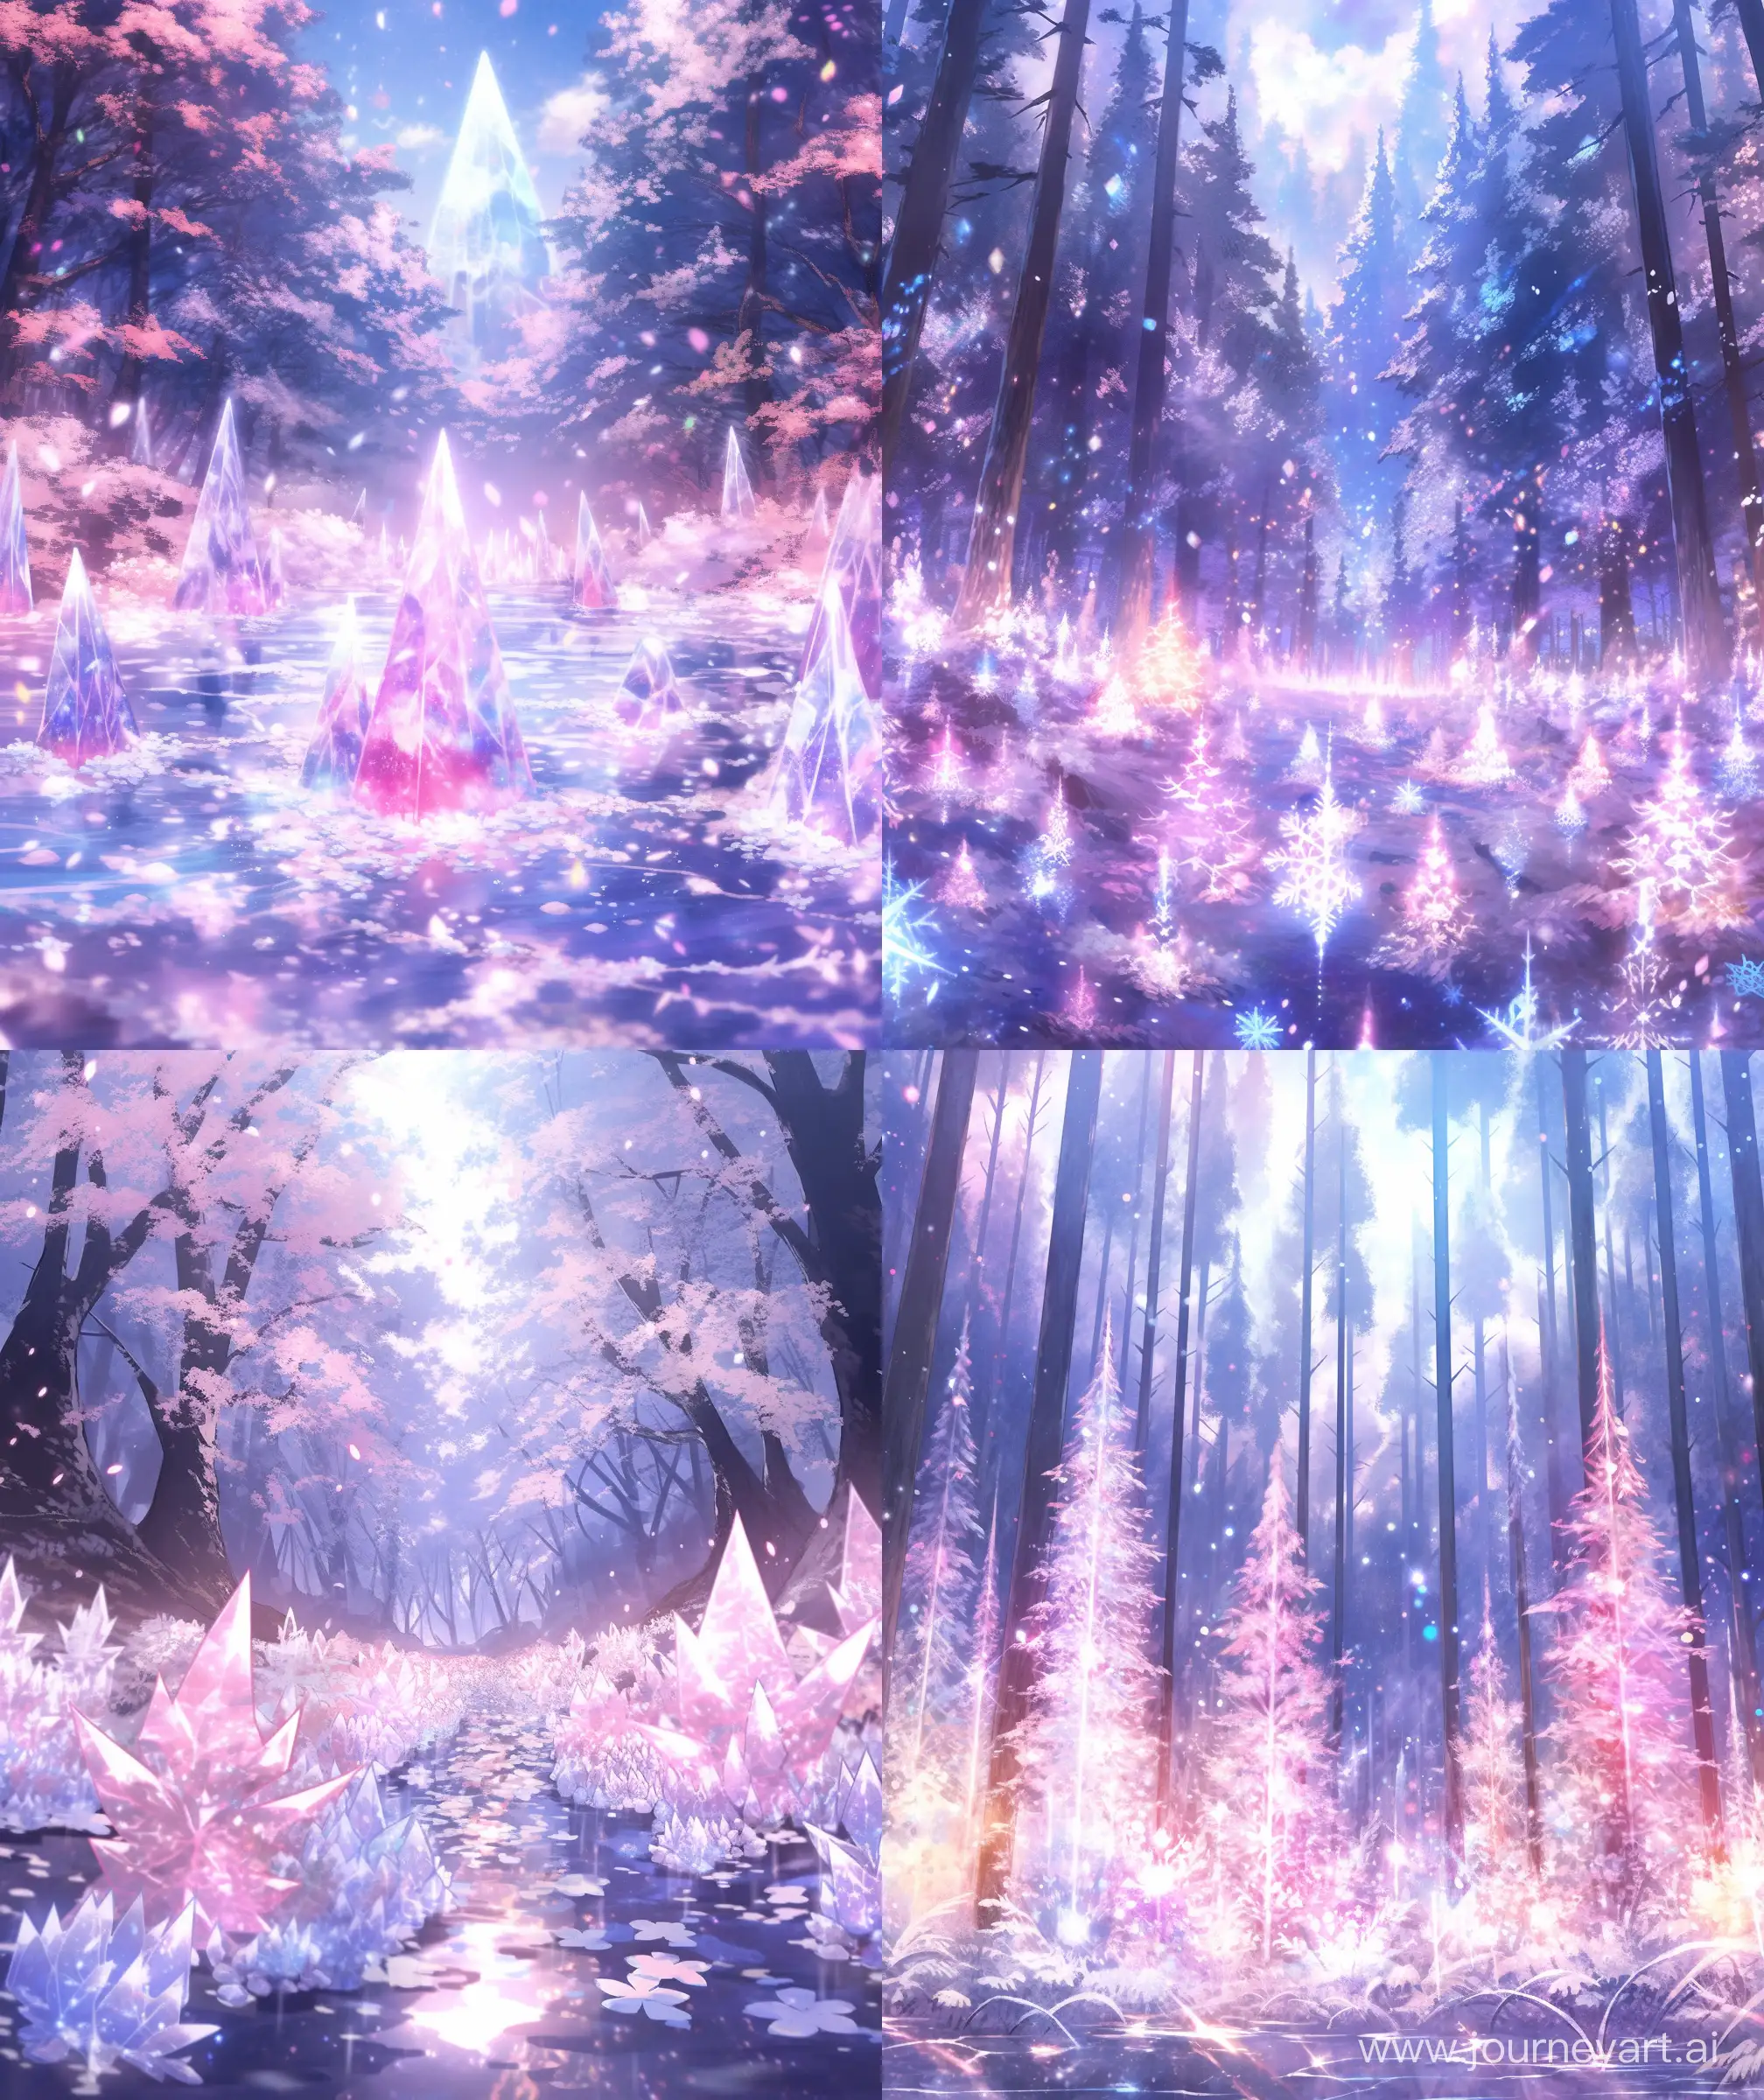 Enchanting-Makoto-Shinkai-Style-Crystal-Forest-with-Northern-Lights